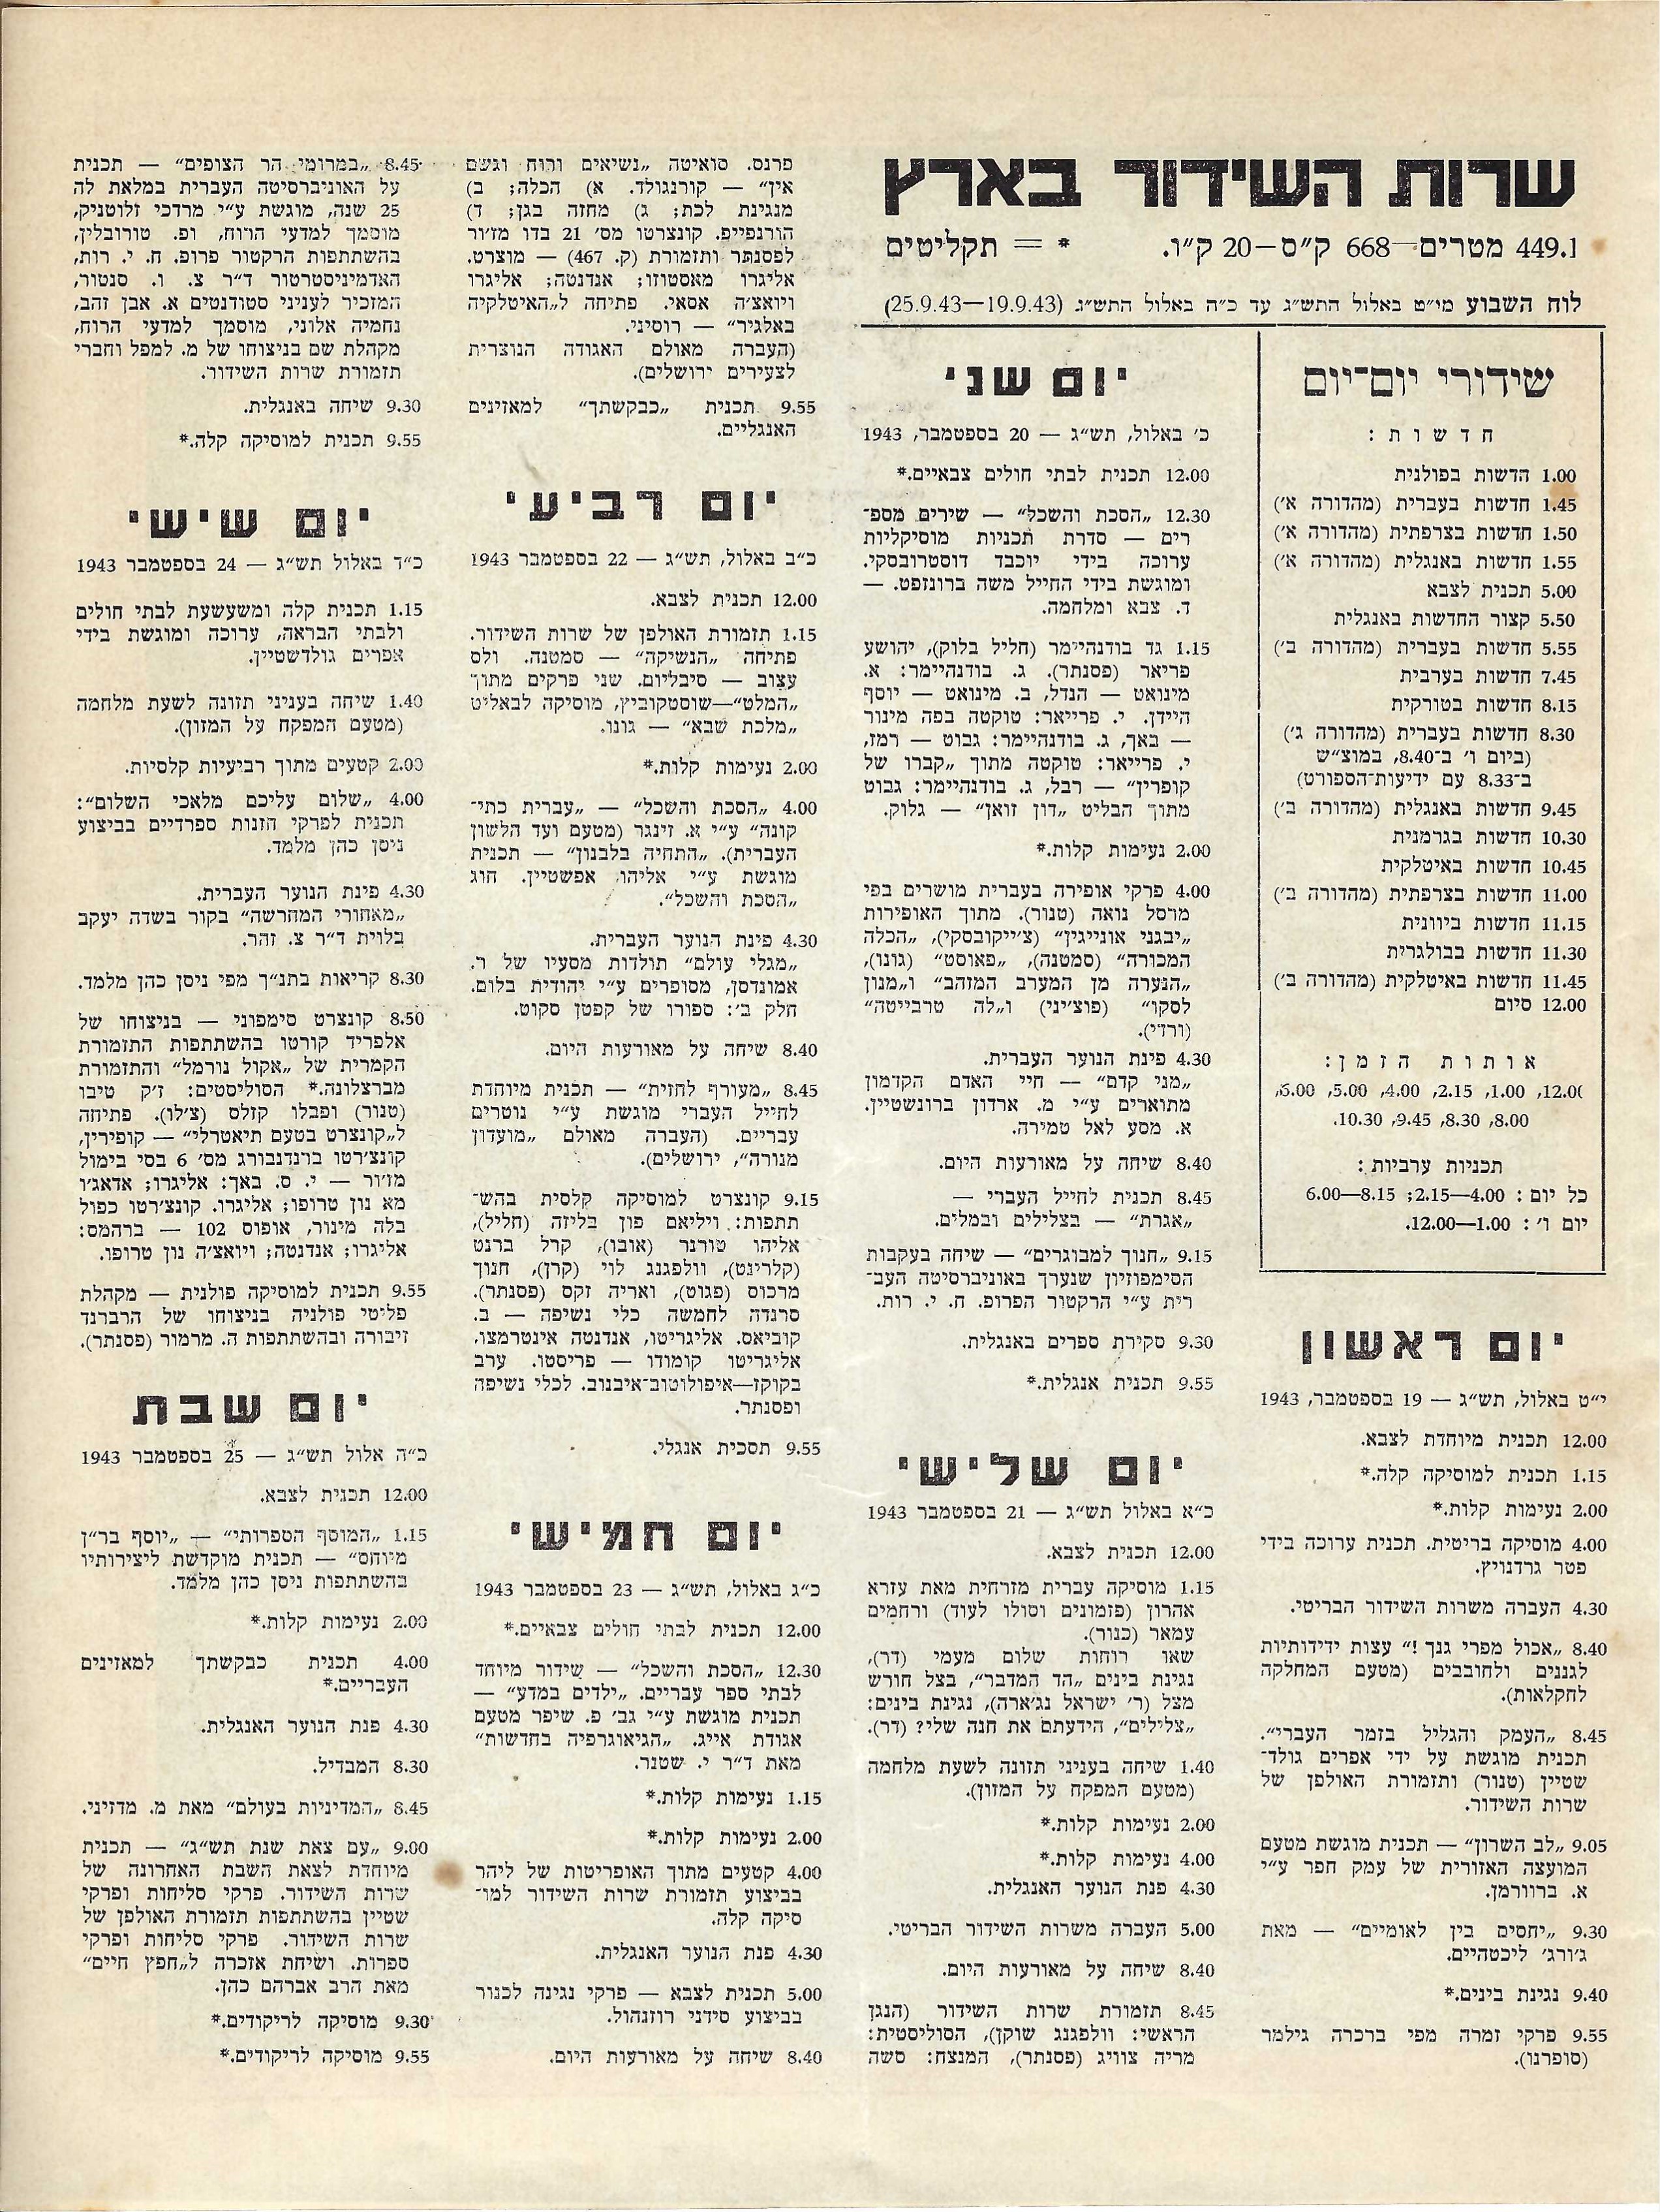 Radio Schedule: September 19, 1943- September 25, 1943